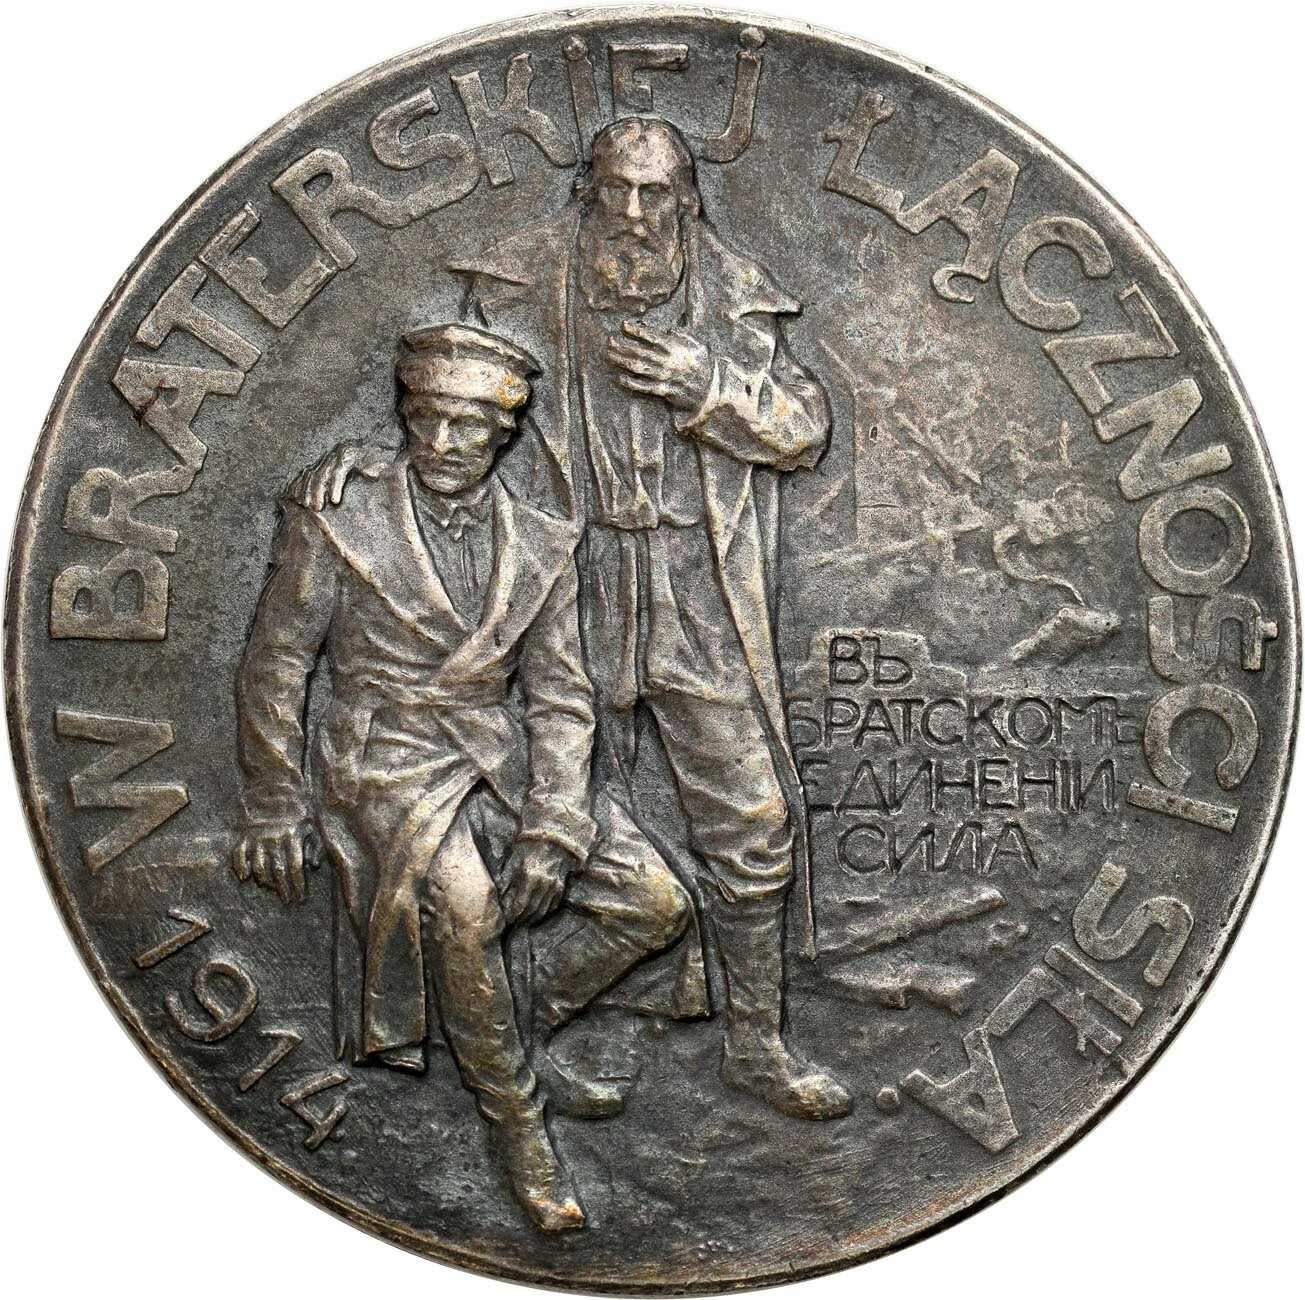 Polska pod zaborami. Medal Rosjanie Braciom Polakom 1914, wariant 32,7 mm